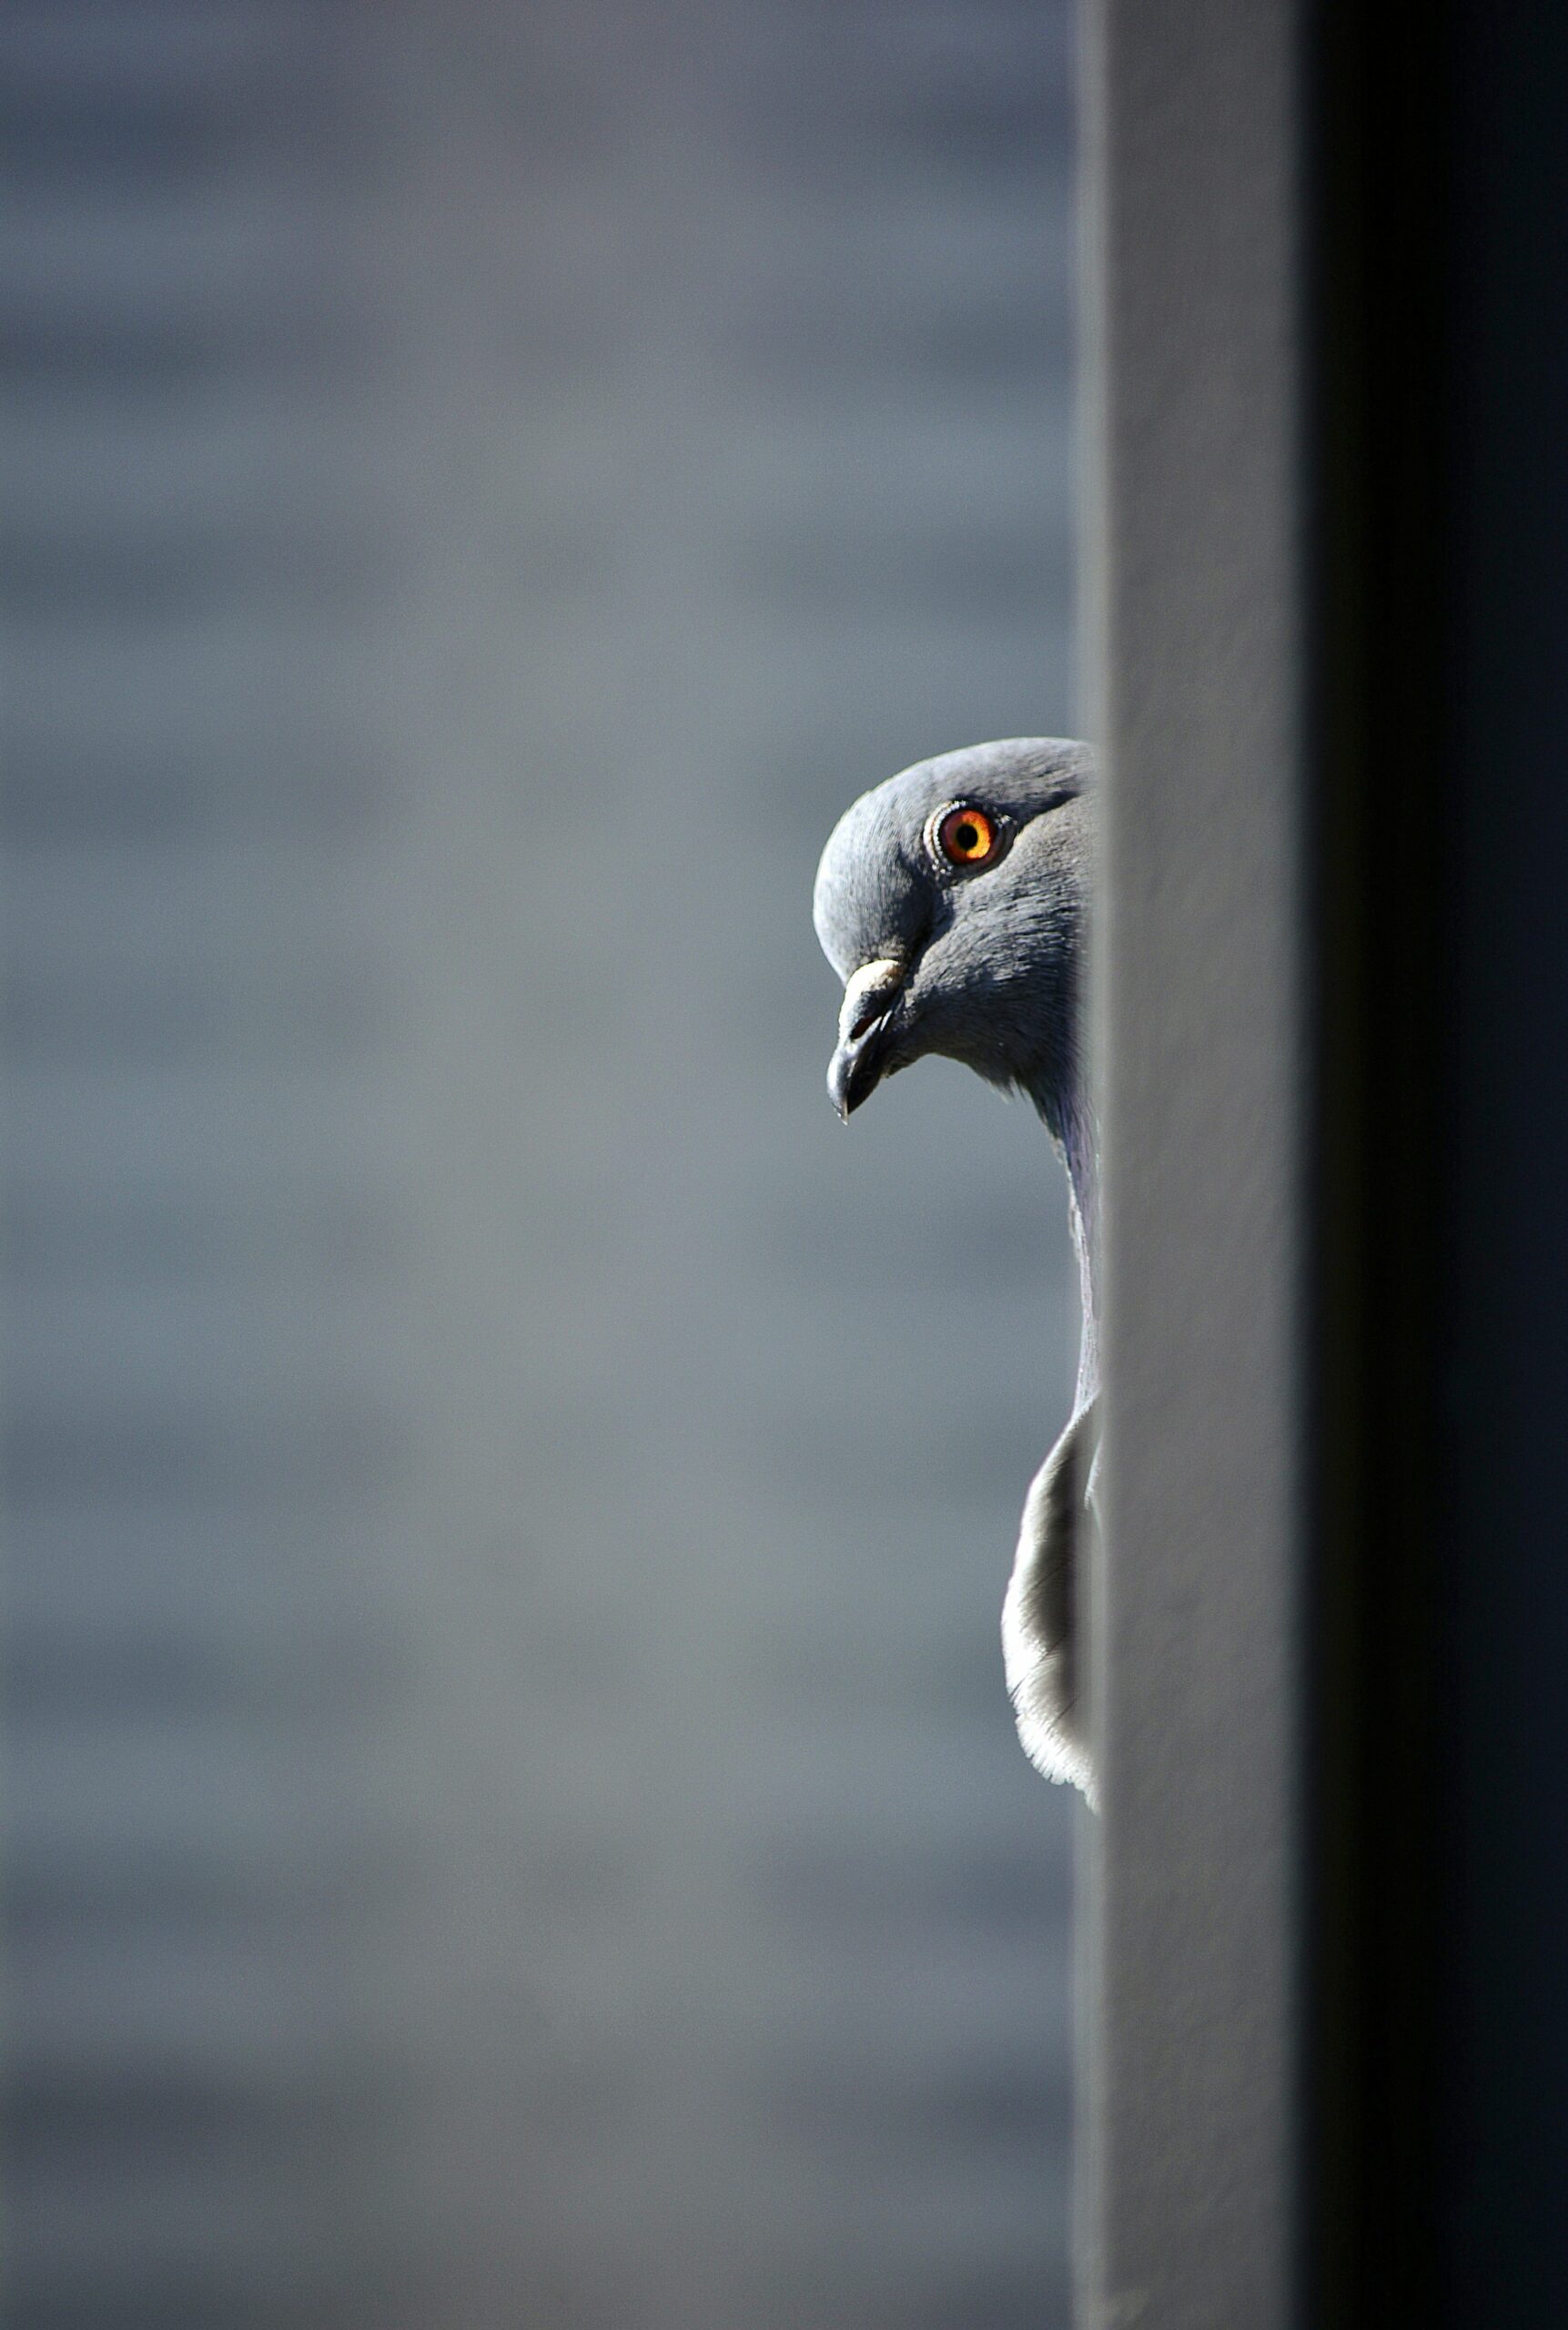 pigeon peeking around corner scared to walk on solar panels thanks to Orton & Wenlocks solar panel bird proofing